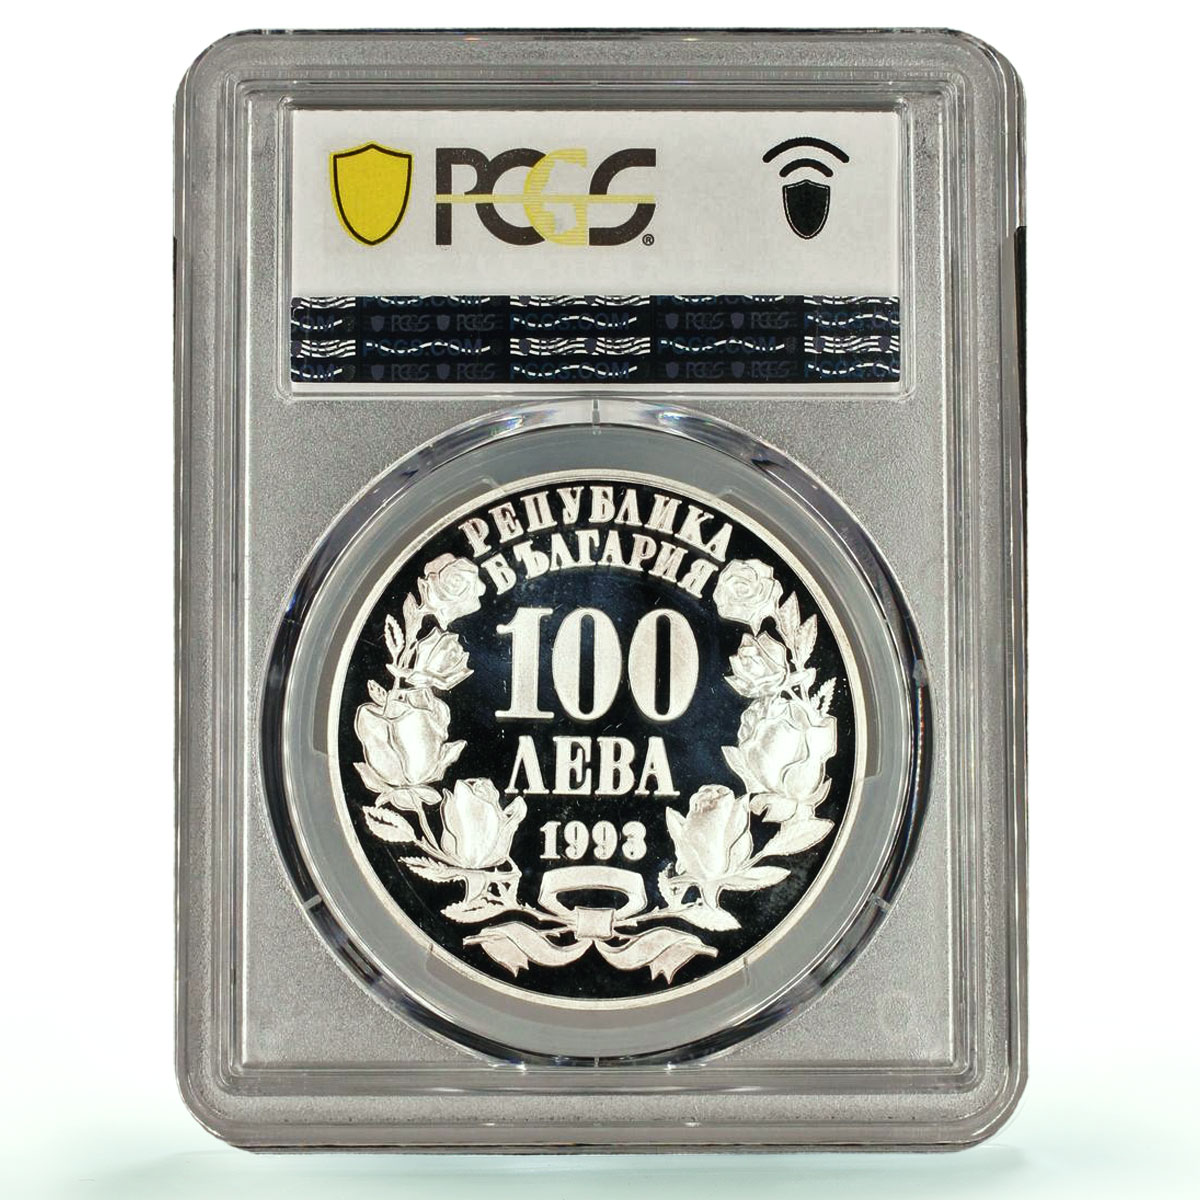 Bulgaria 100 leva Parliament Building Politics KM-231 PR65 PCGS silver coin 1993